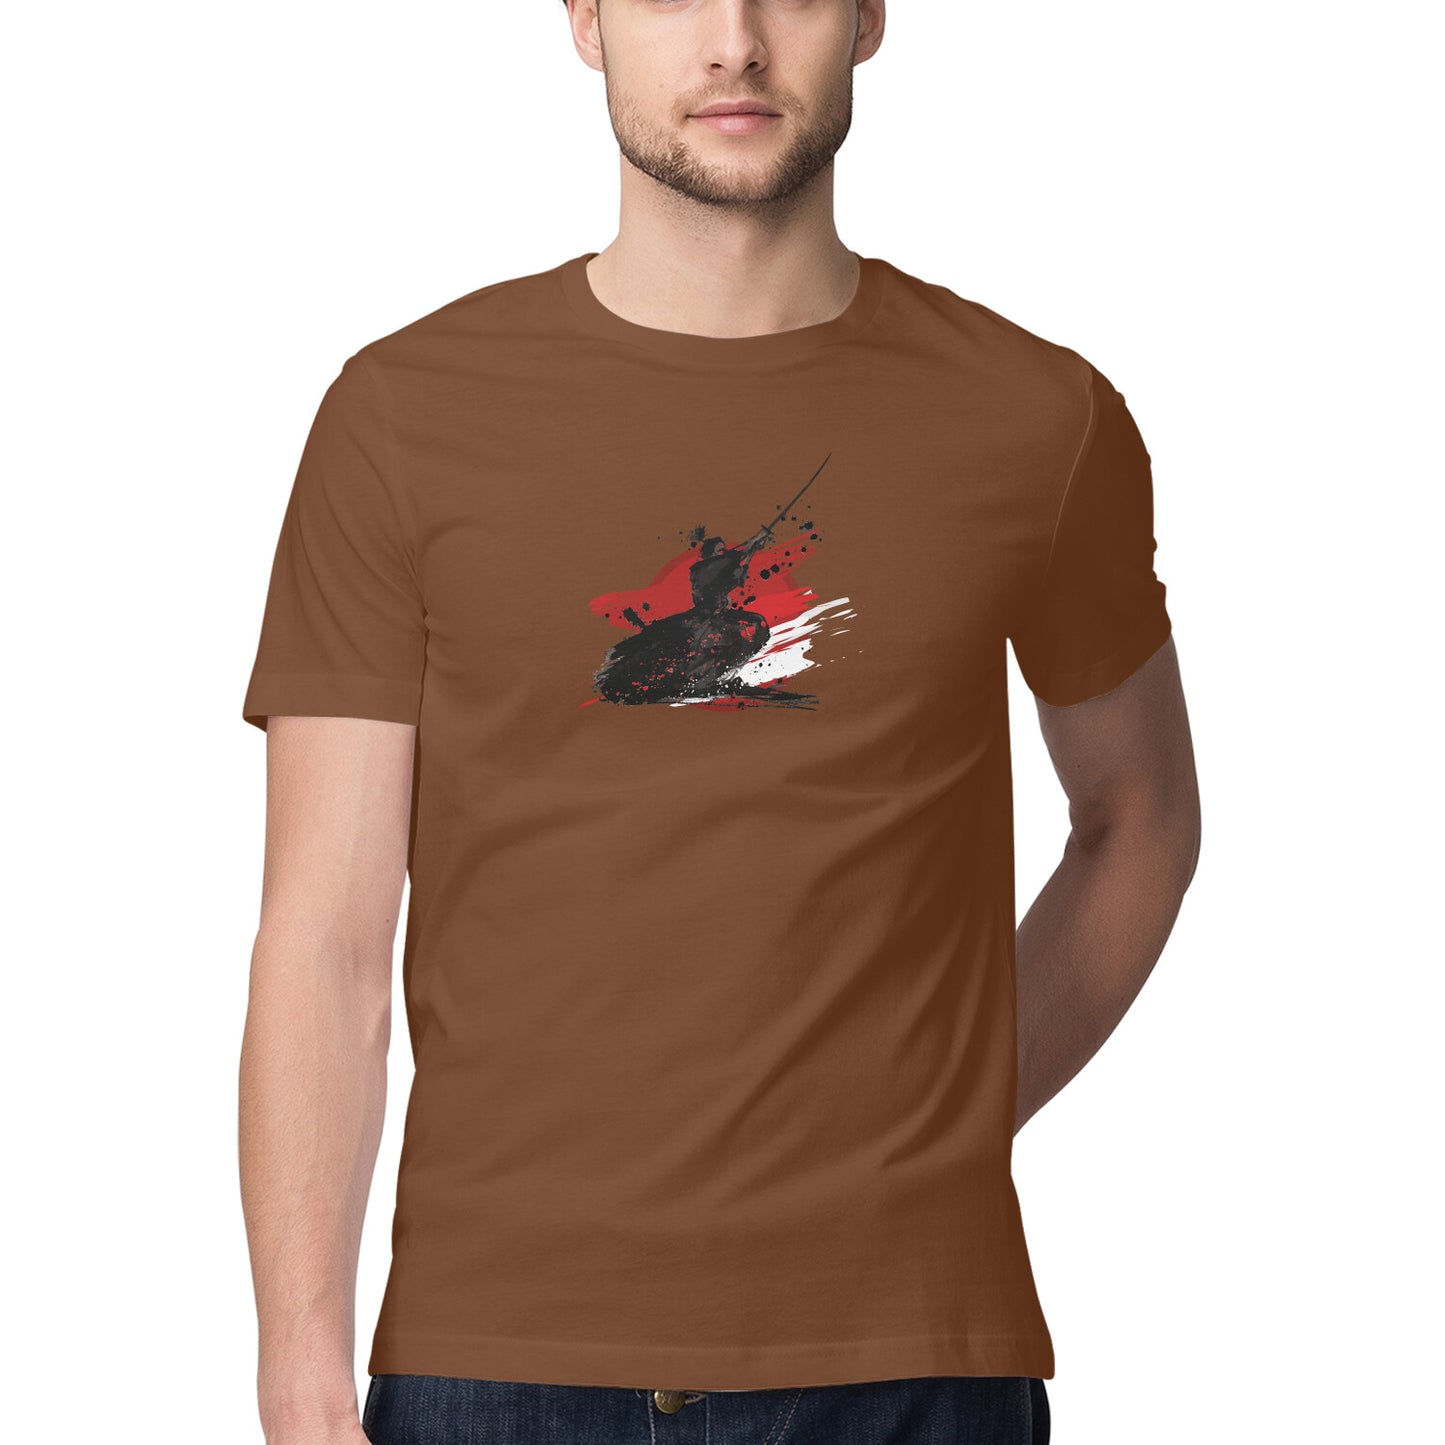 Samurai Printed Graphic T-Shirt